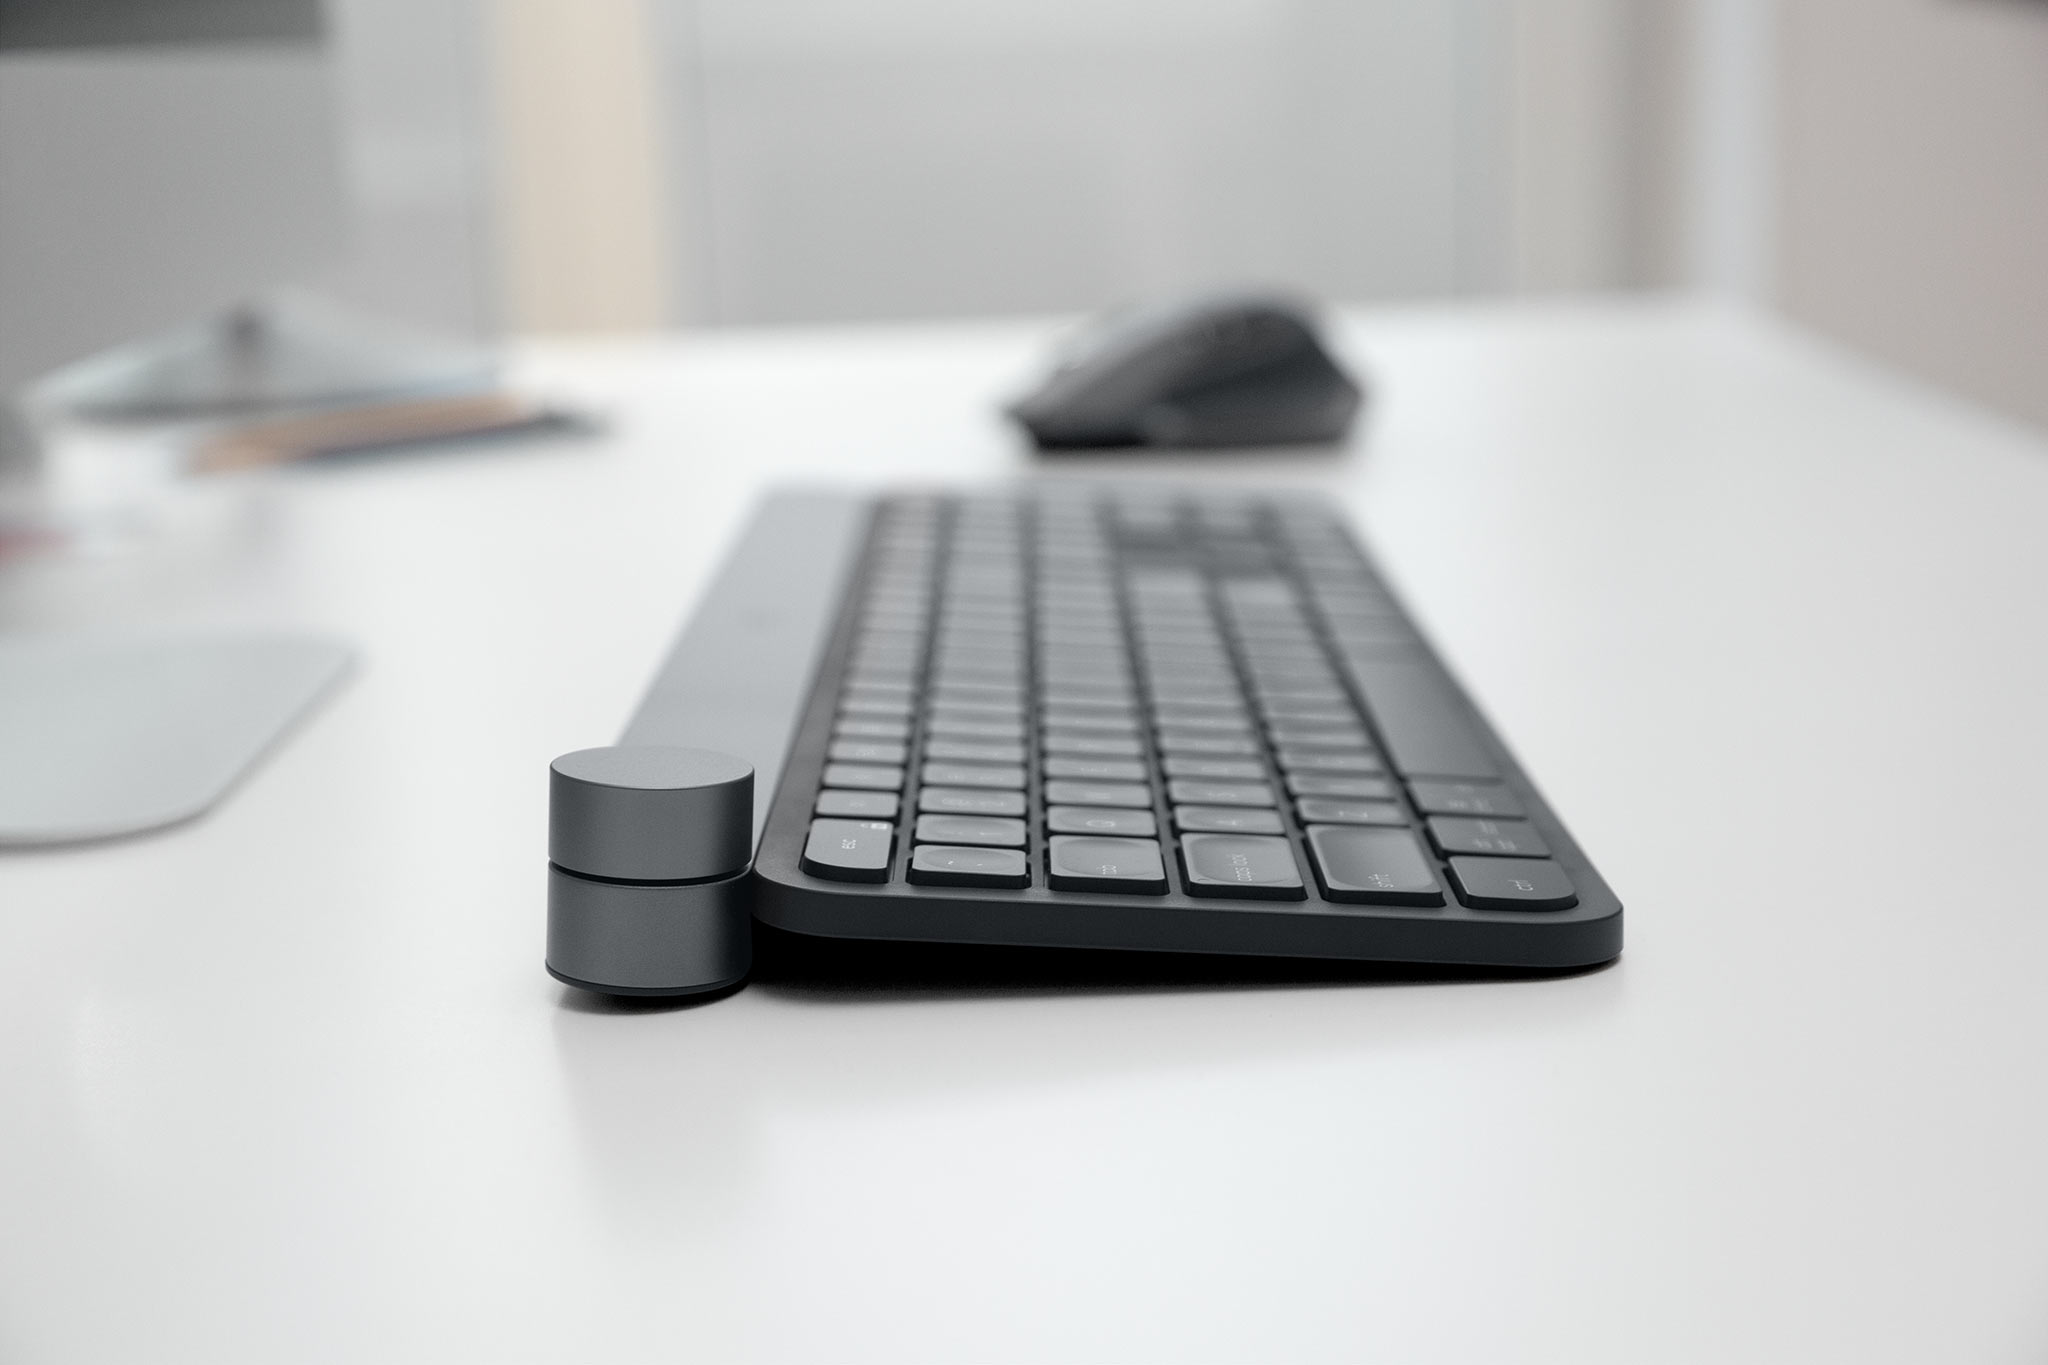 Keyboard - slanted